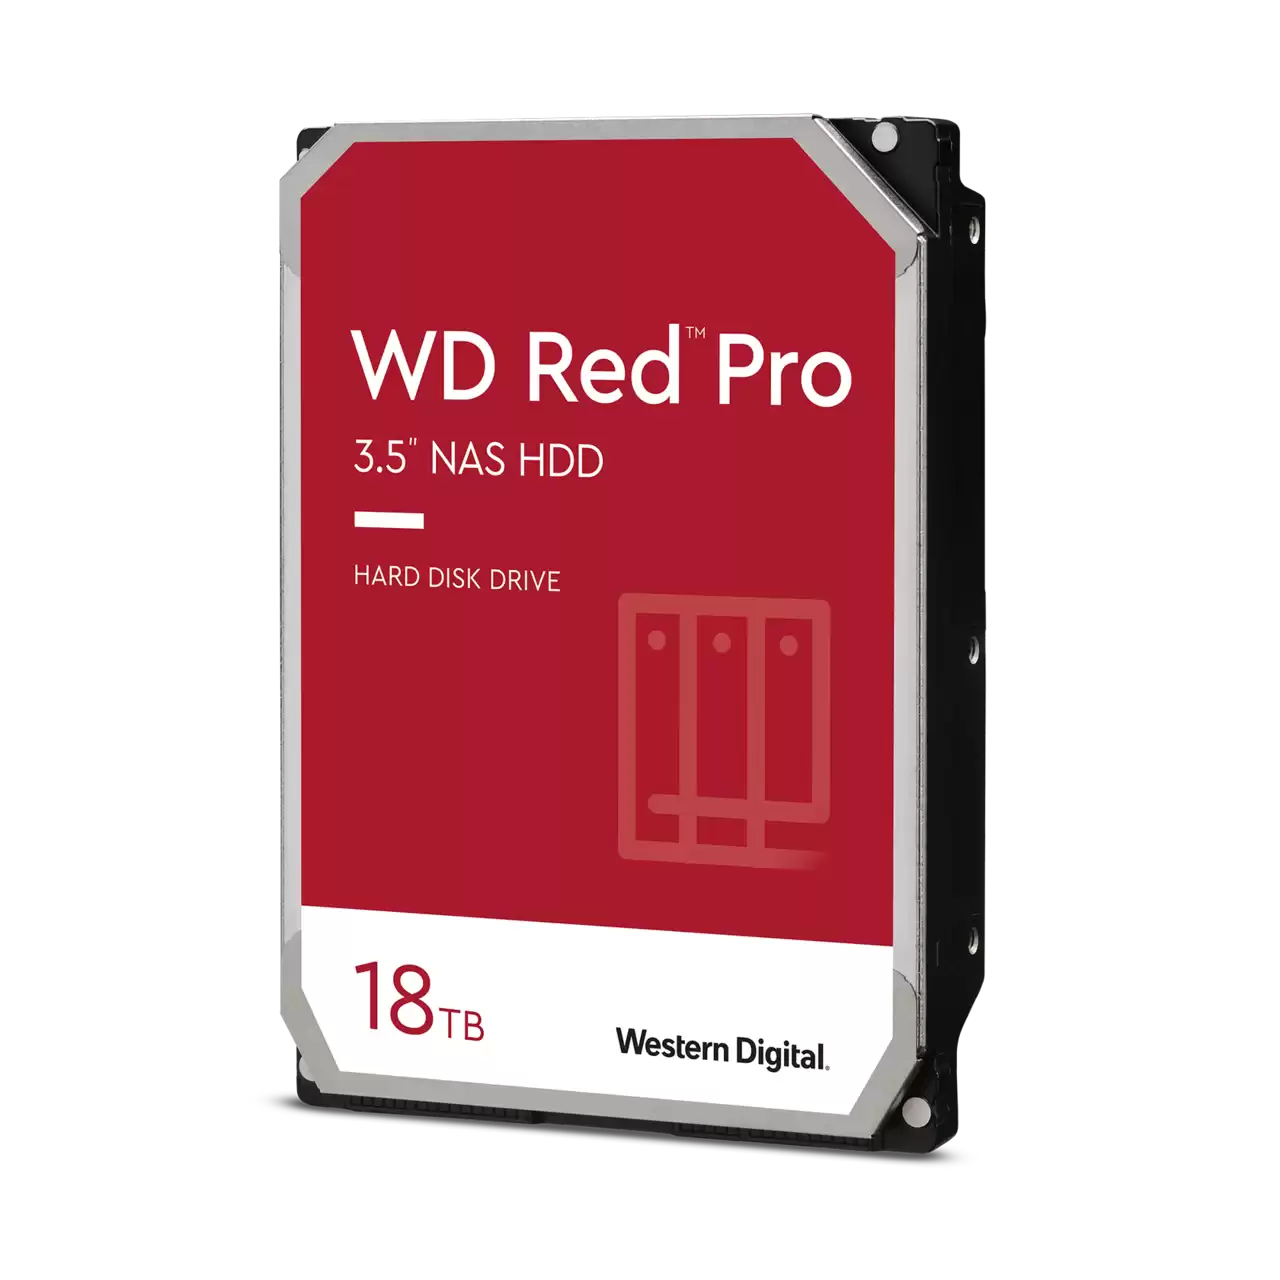 Western Digital WD Red Pro NAS Internal Hard Drive 3.5"